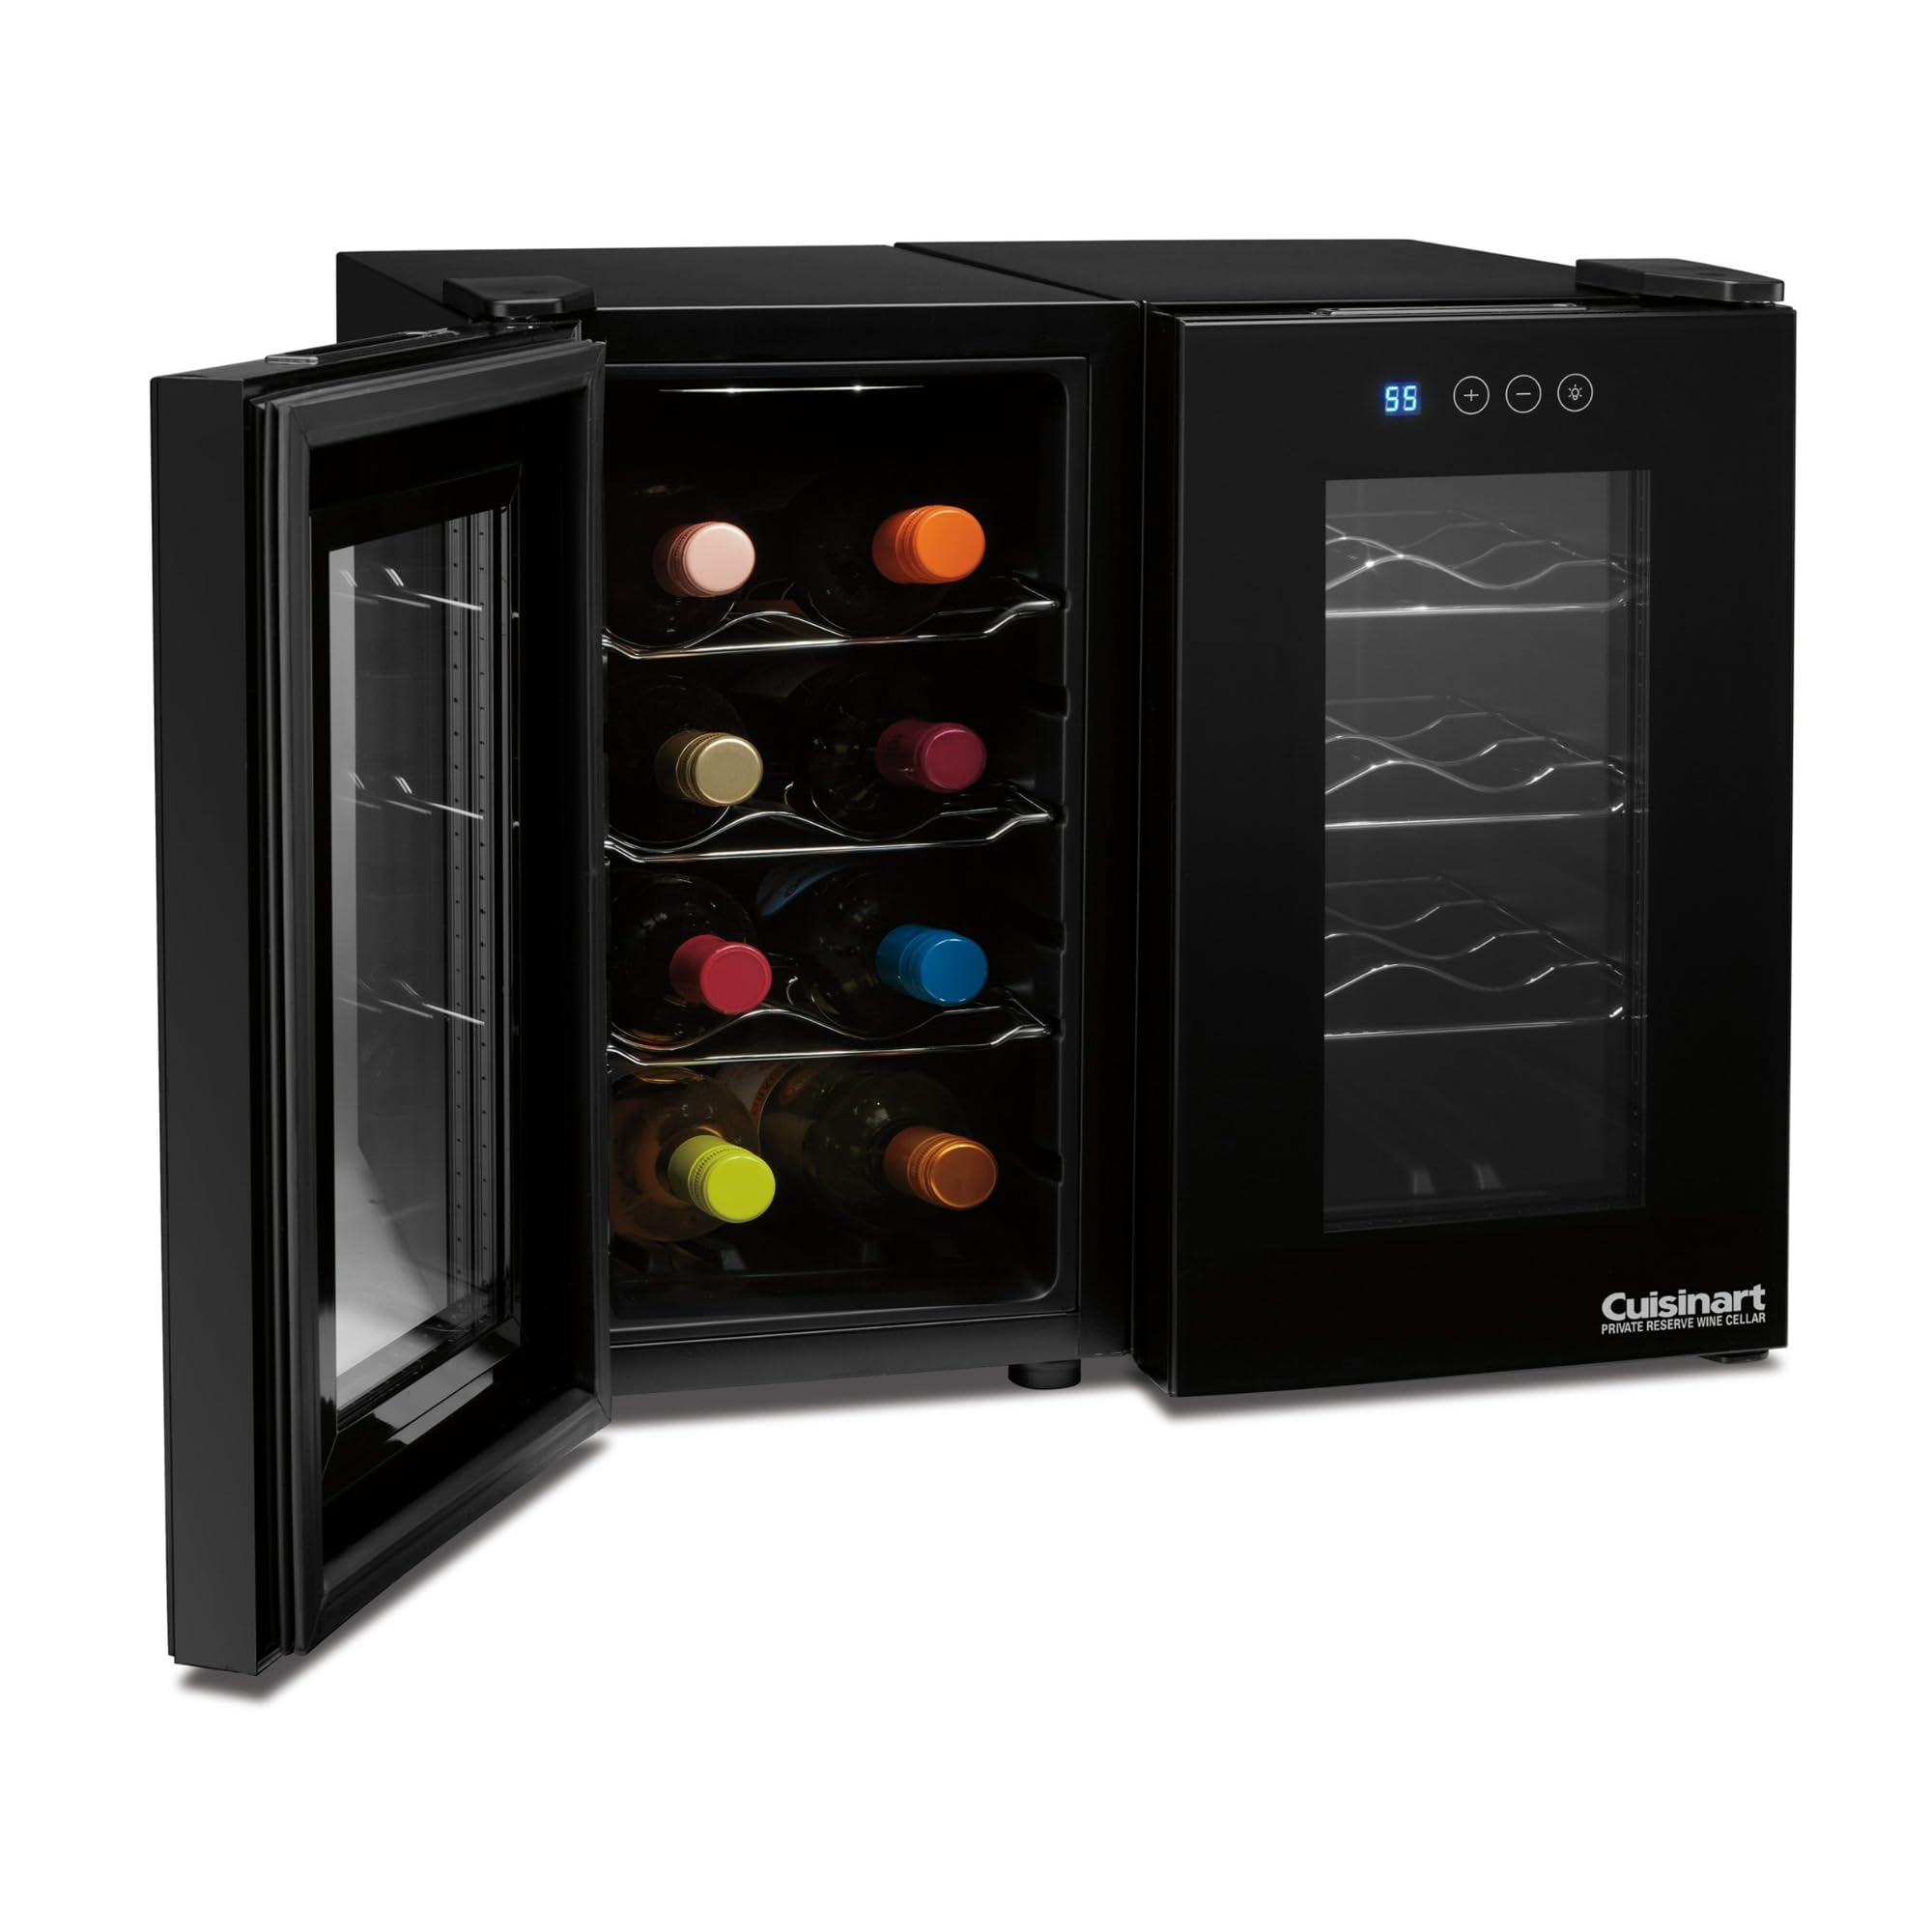 Cuisinart Private Reserve Dual 16-Bottle Set Wine Cellar, Black